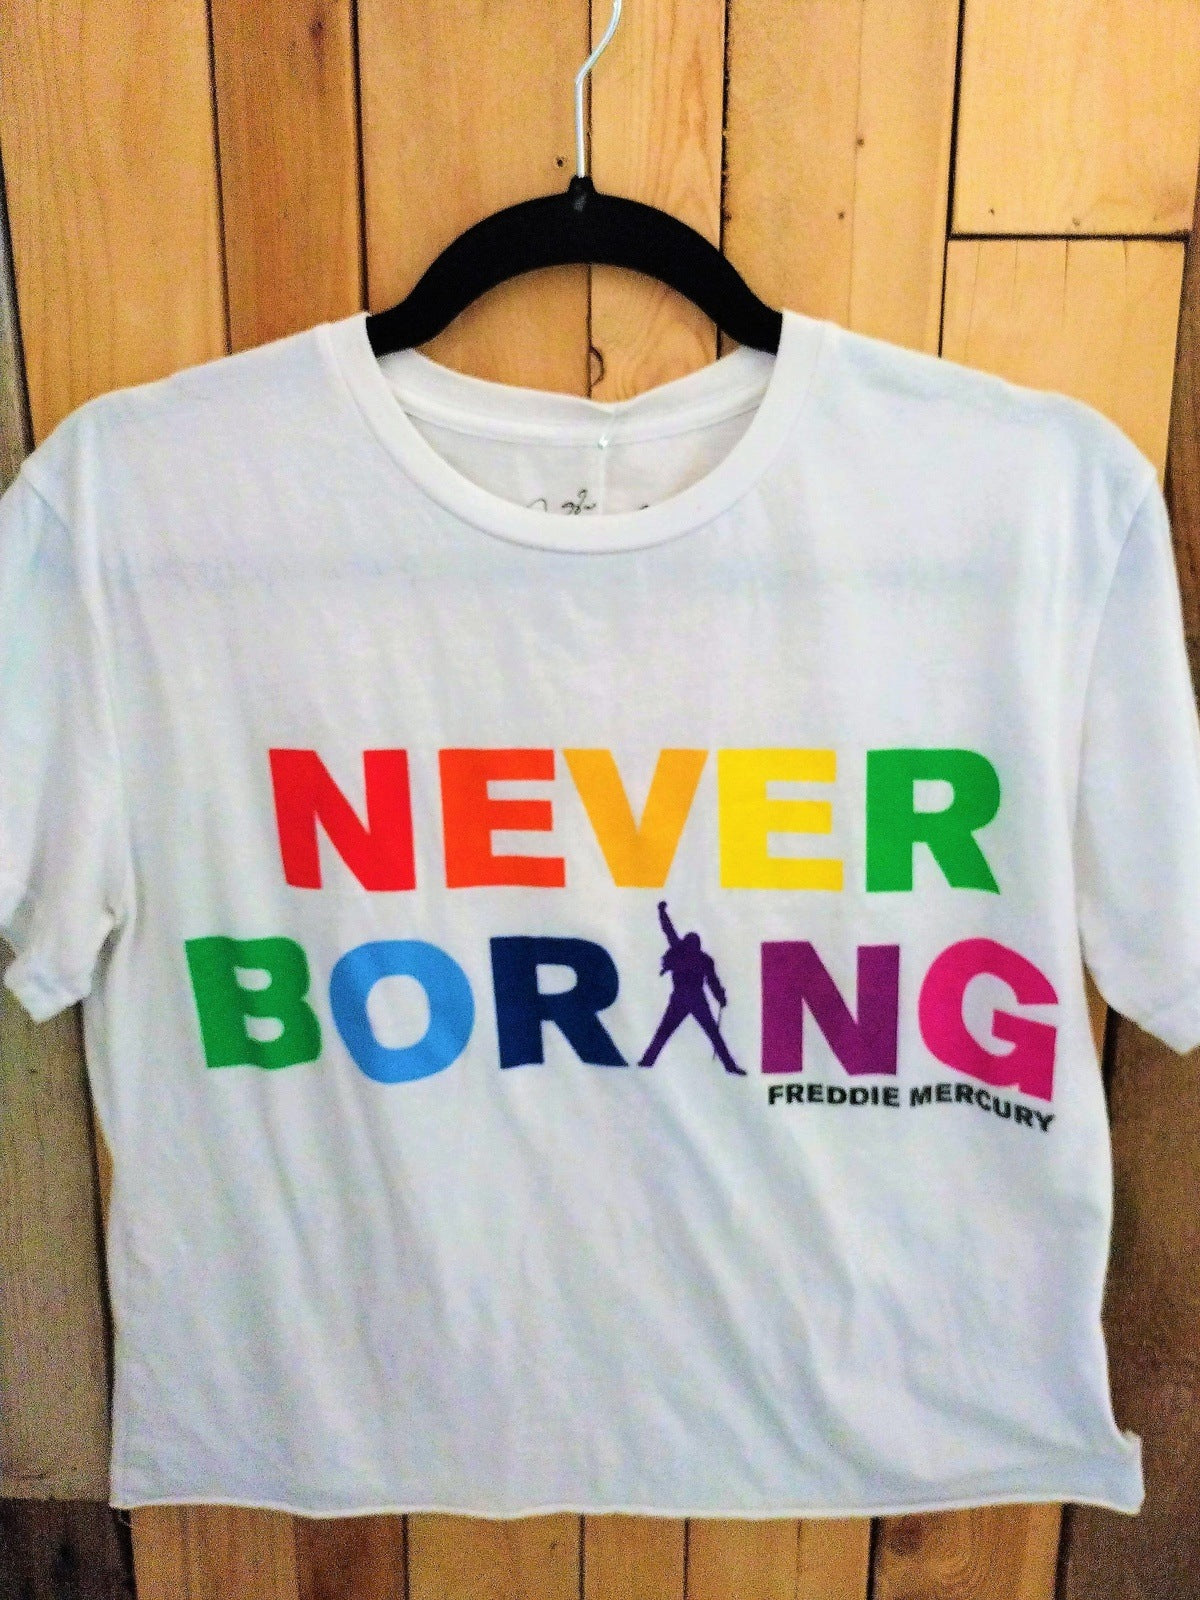 Freddie Mercury "Never Boring" official merch Crop Tee Shirt Women's Medium